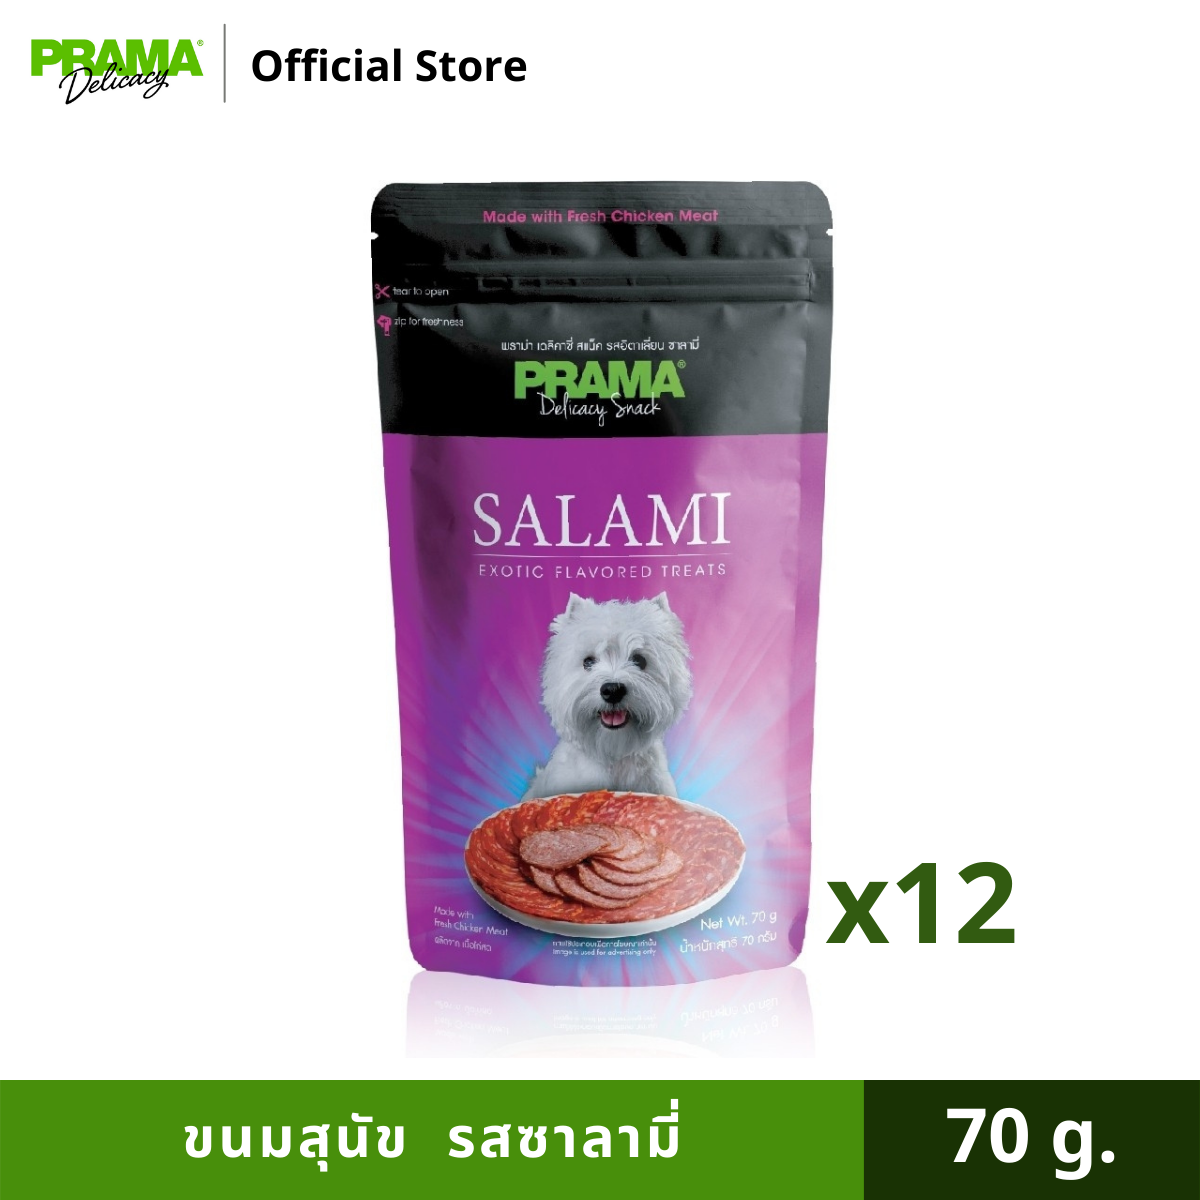 PRAMA Delicacy พราม่า เดลิคาซี่ รสซาลามี่ ขนมสุนัข ขนาด 70 กรัม - 12 ซอง / Box